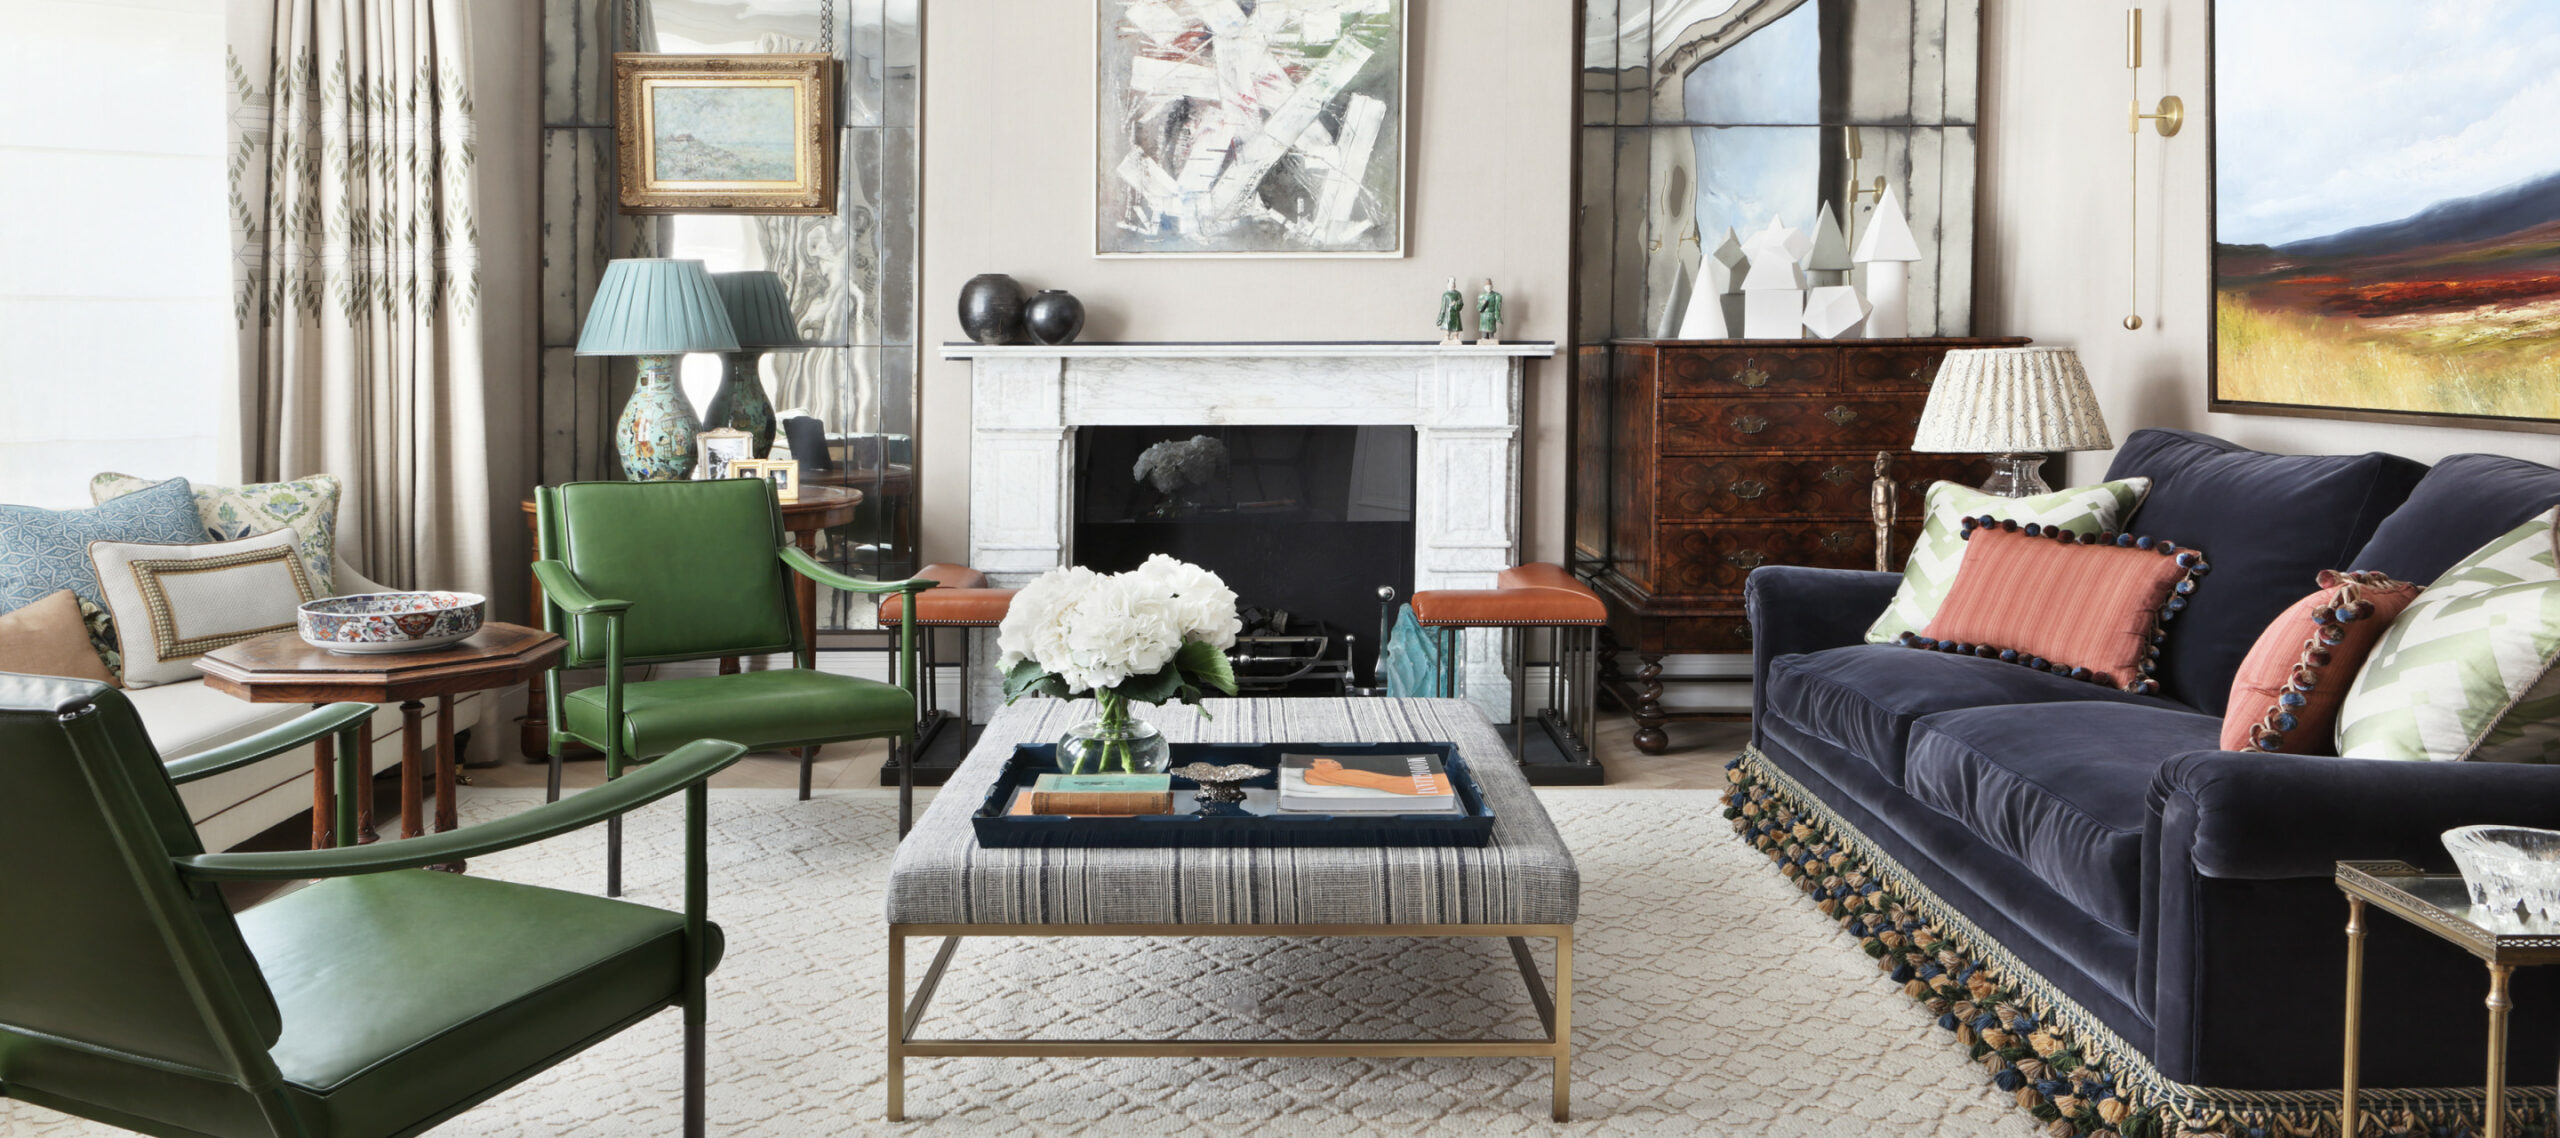 Formal living room ideas:  tips for elegant sitting rooms